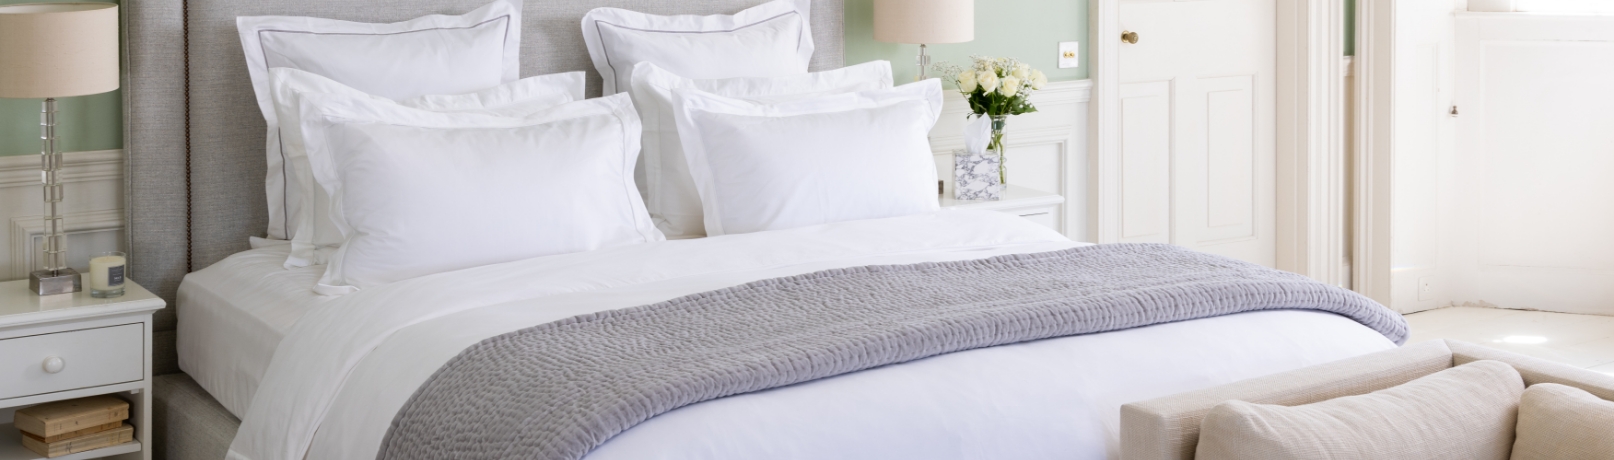 Bedding & Bed Linen